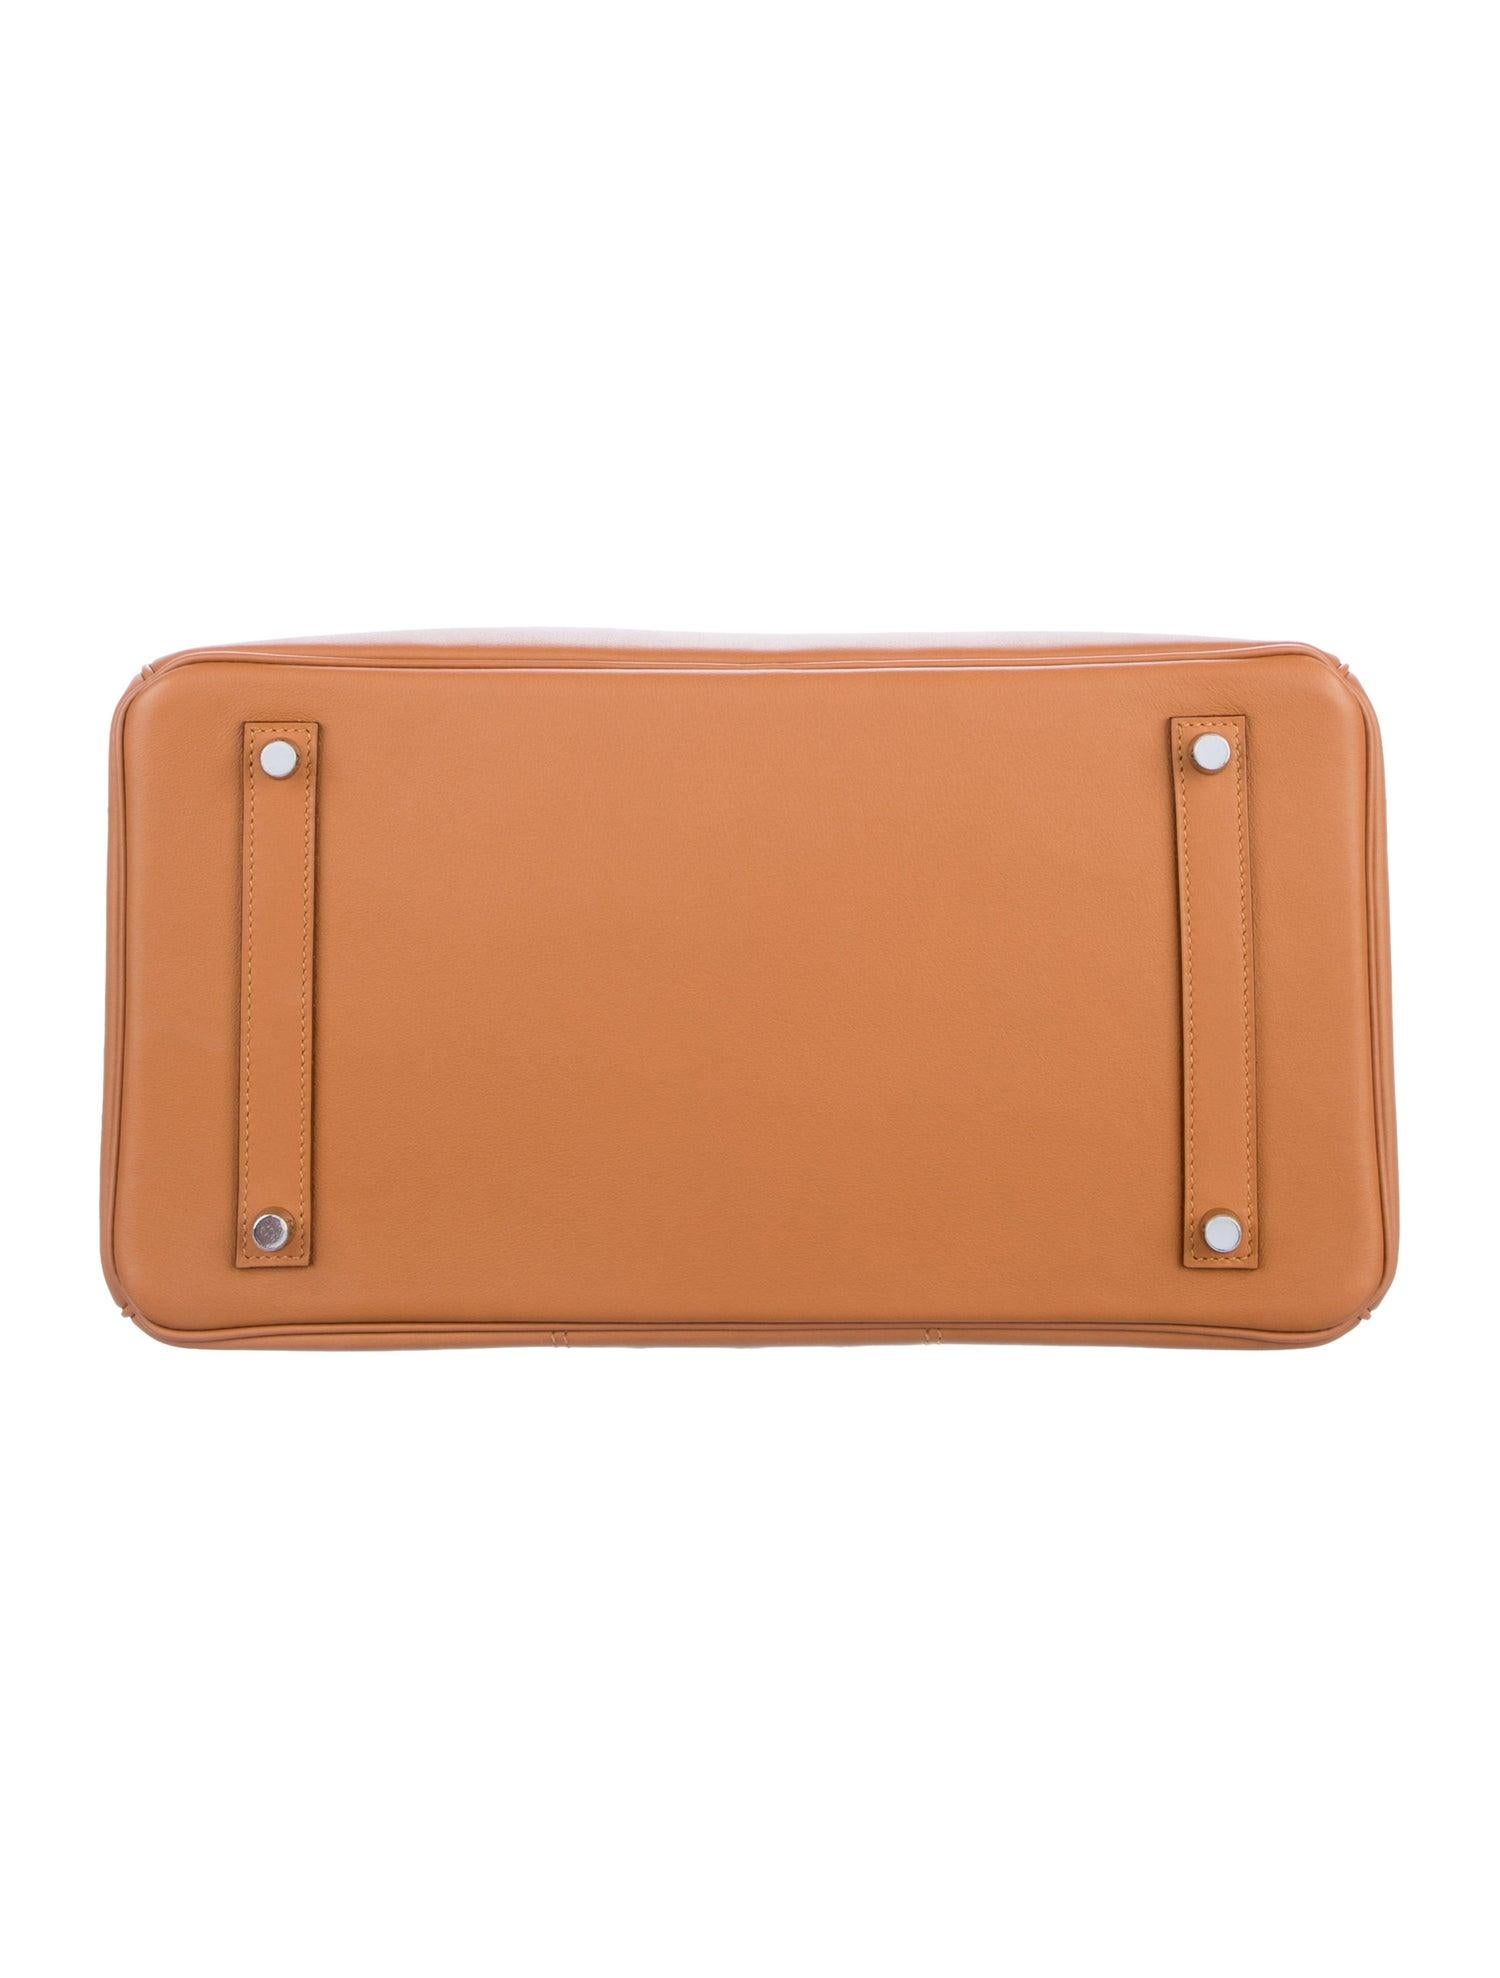 Orange Hermes NEW Birkin 35 Cognac Checker Leather Top Handle Satchel Tote Bag in Box 